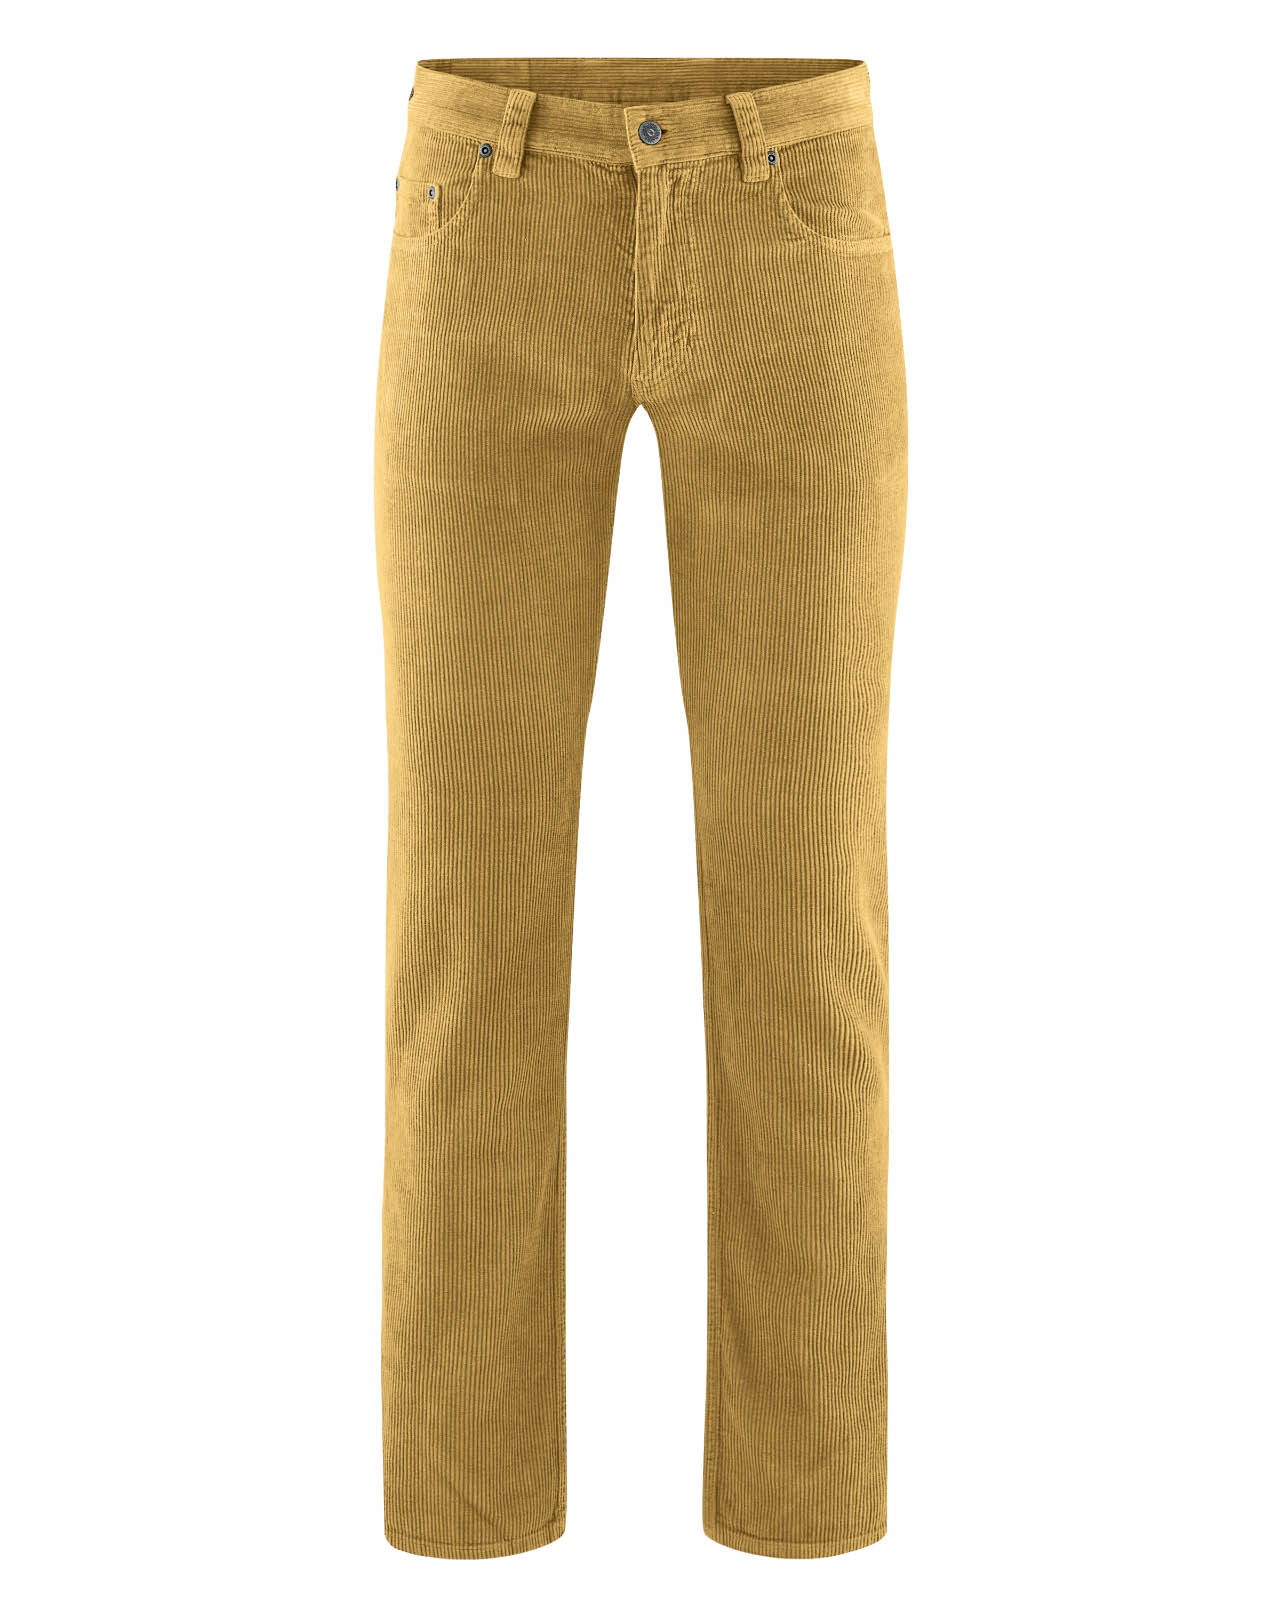 DH590 Cord pants, woven